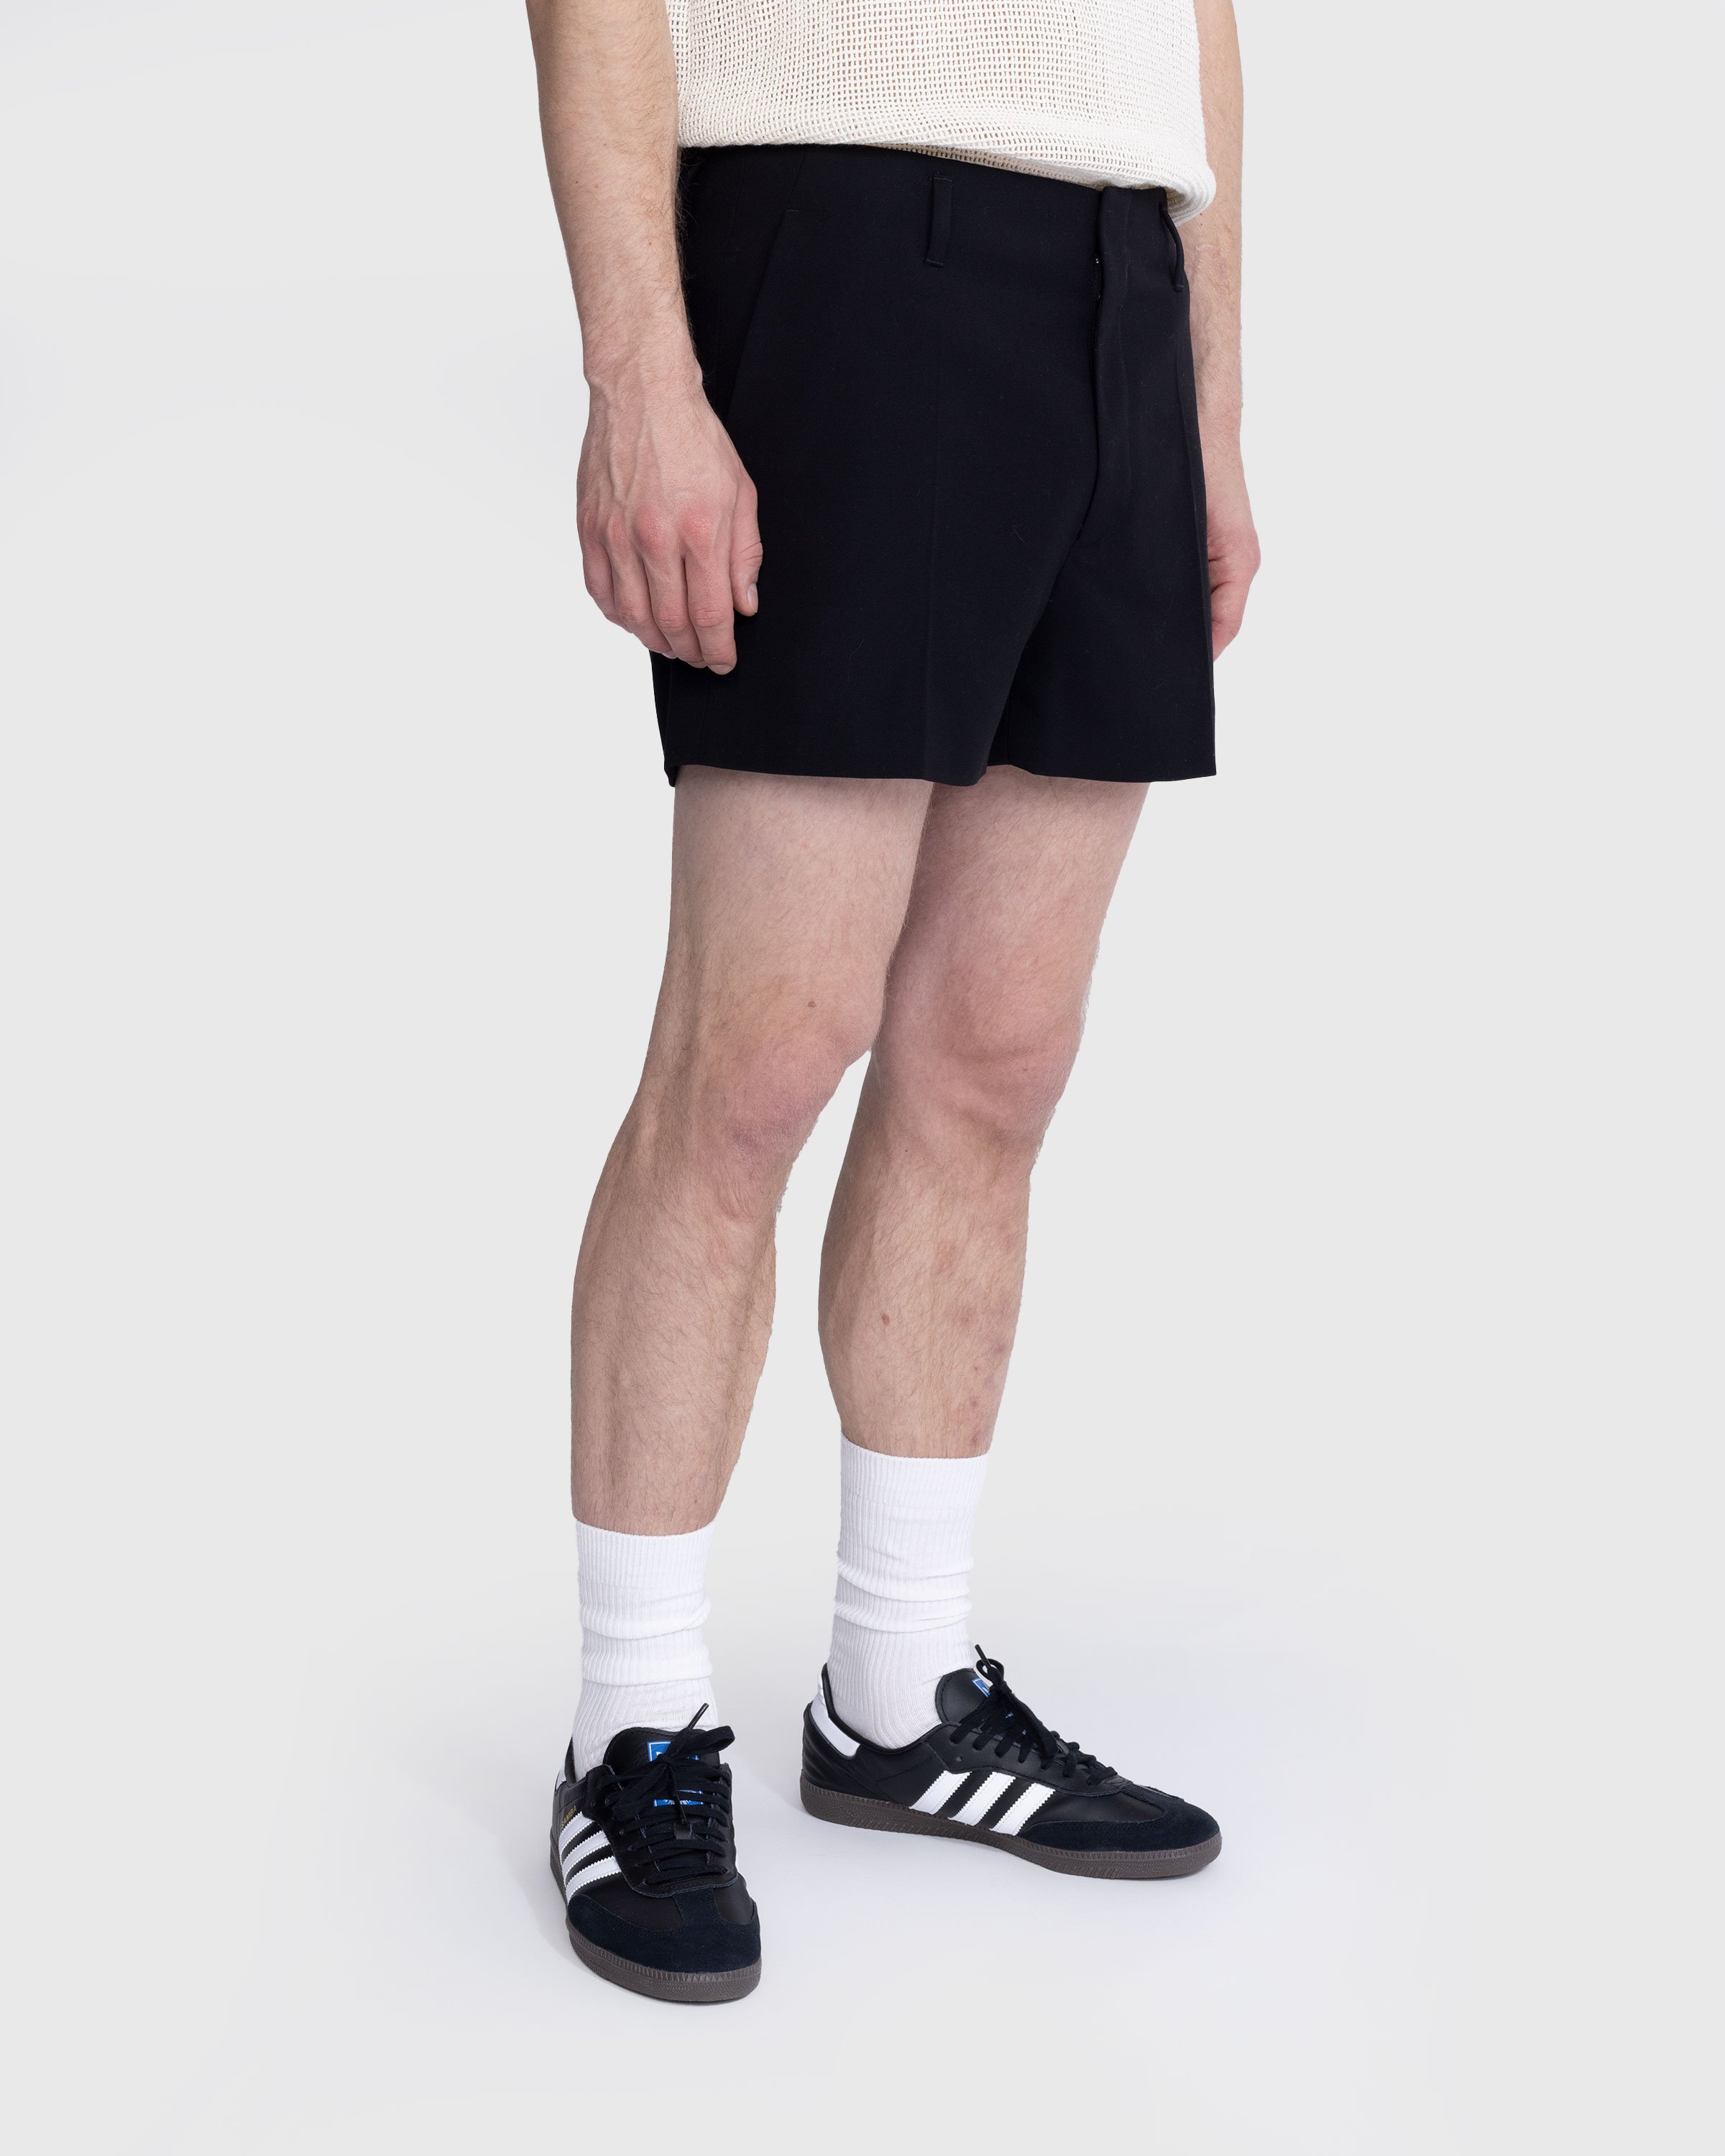 Dries van Noten - Paolo Short Pants Black - Clothing - Black - Image 4